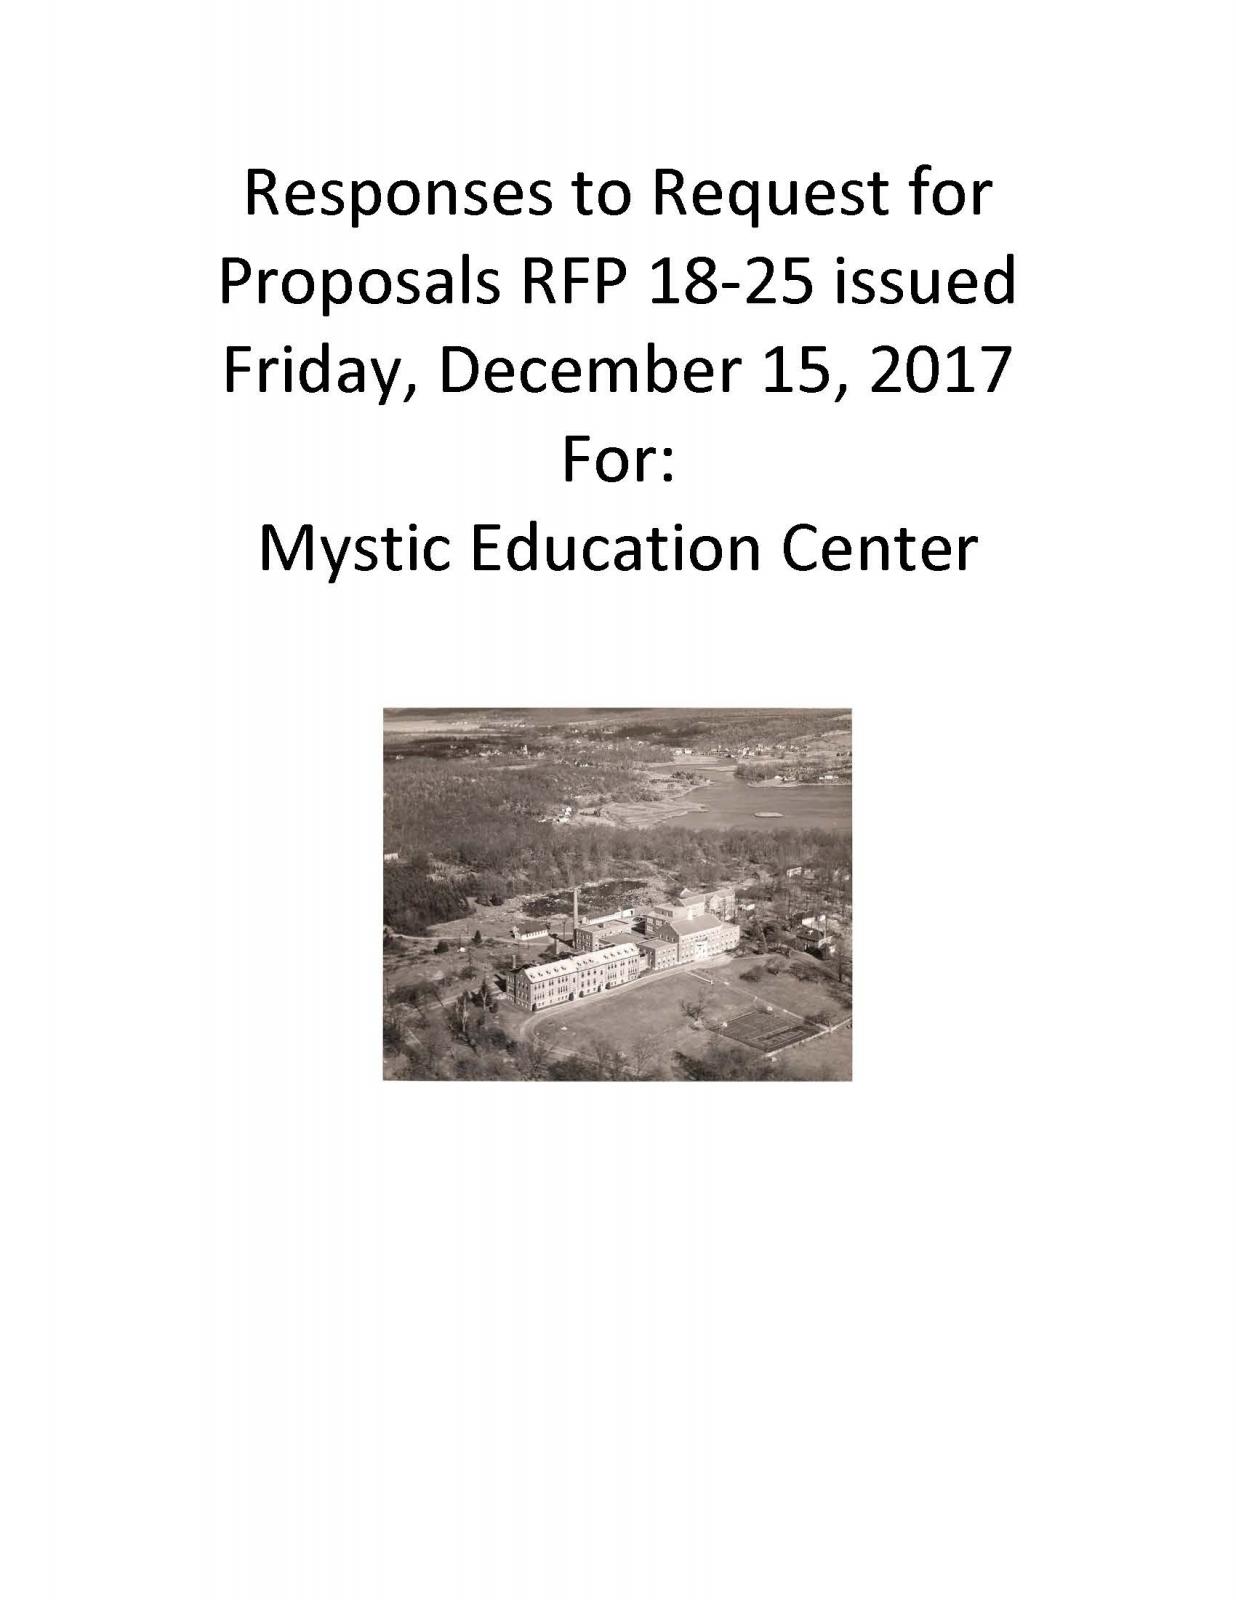 Mystic Education Center RFP Responses